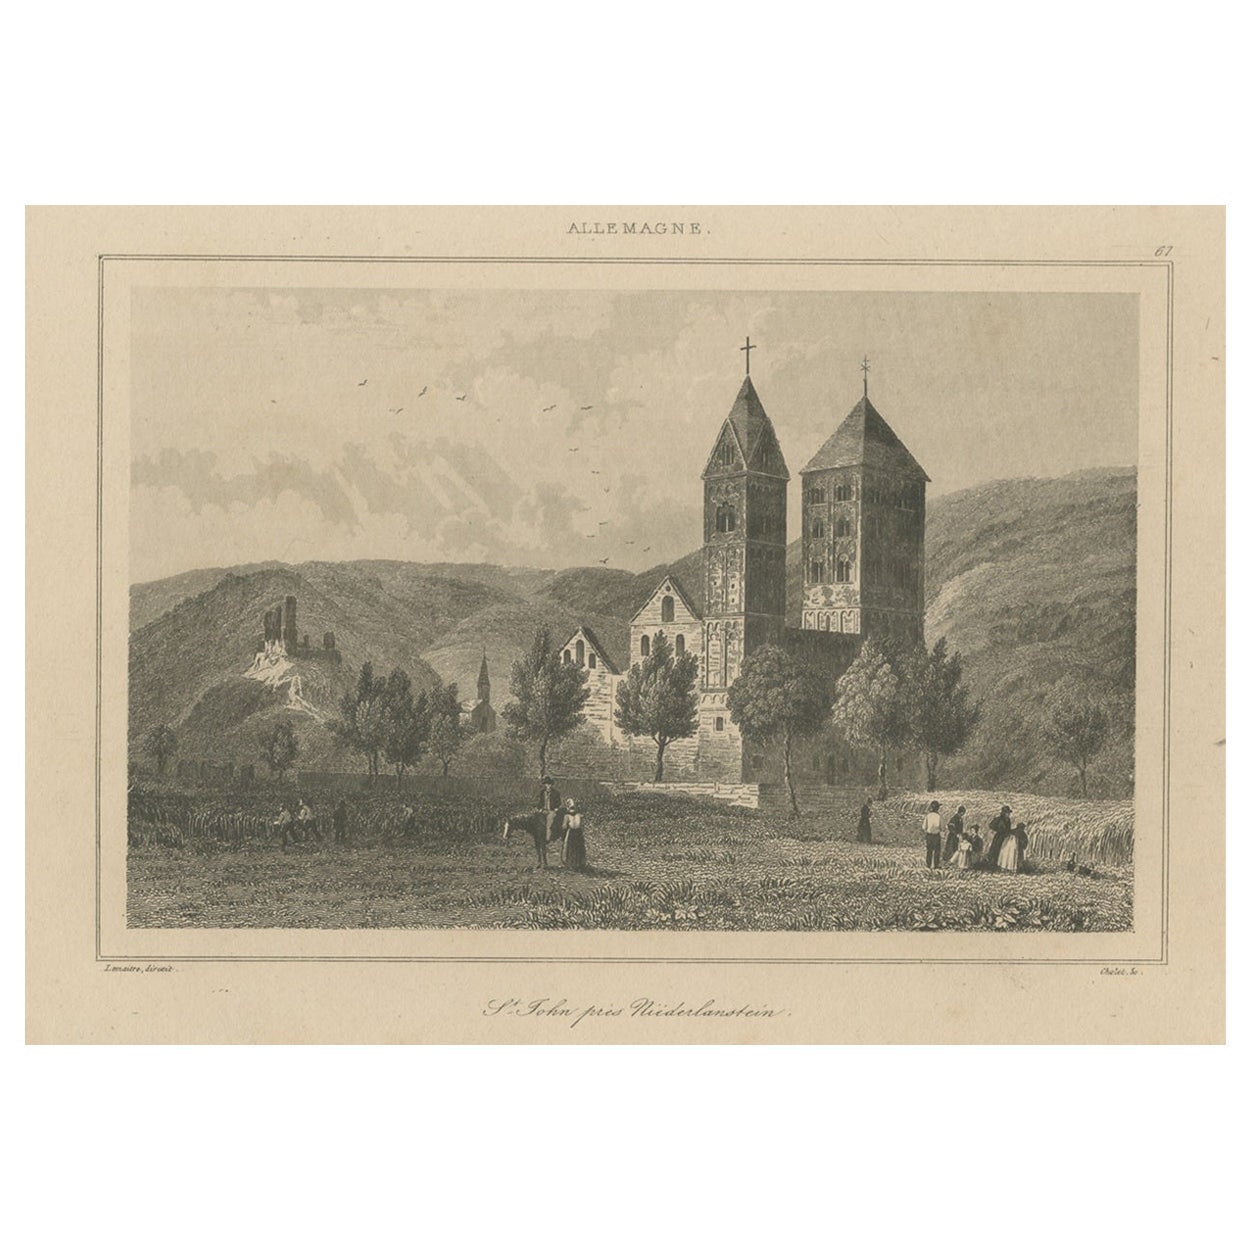 Antique Print of of St John's Church near Niederlahnstein, Germany